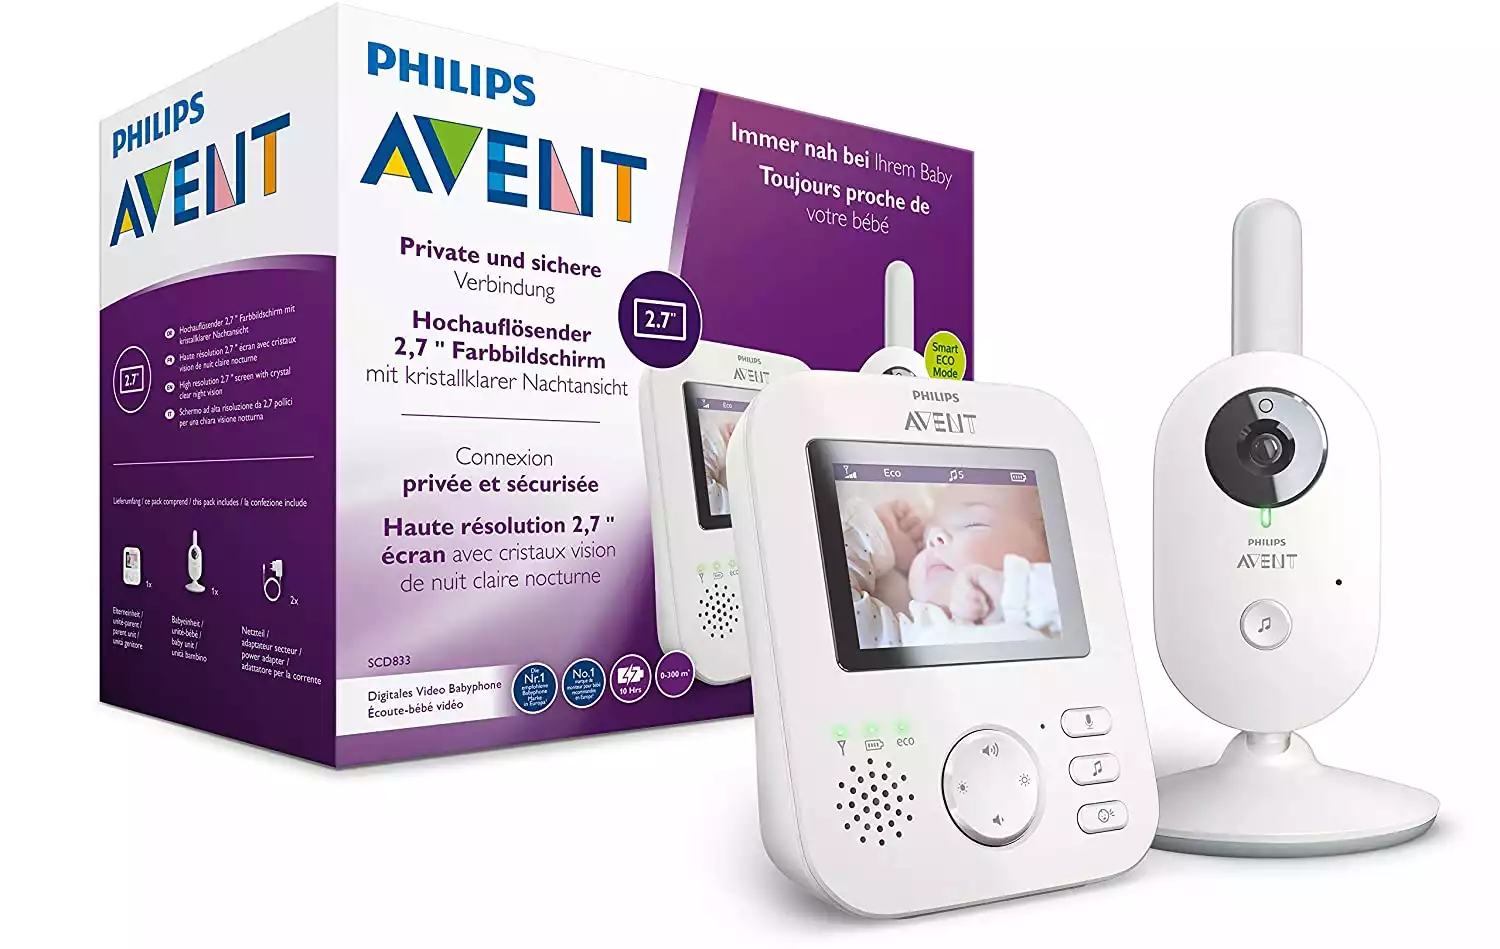 Philips AVENT Video Babyphone